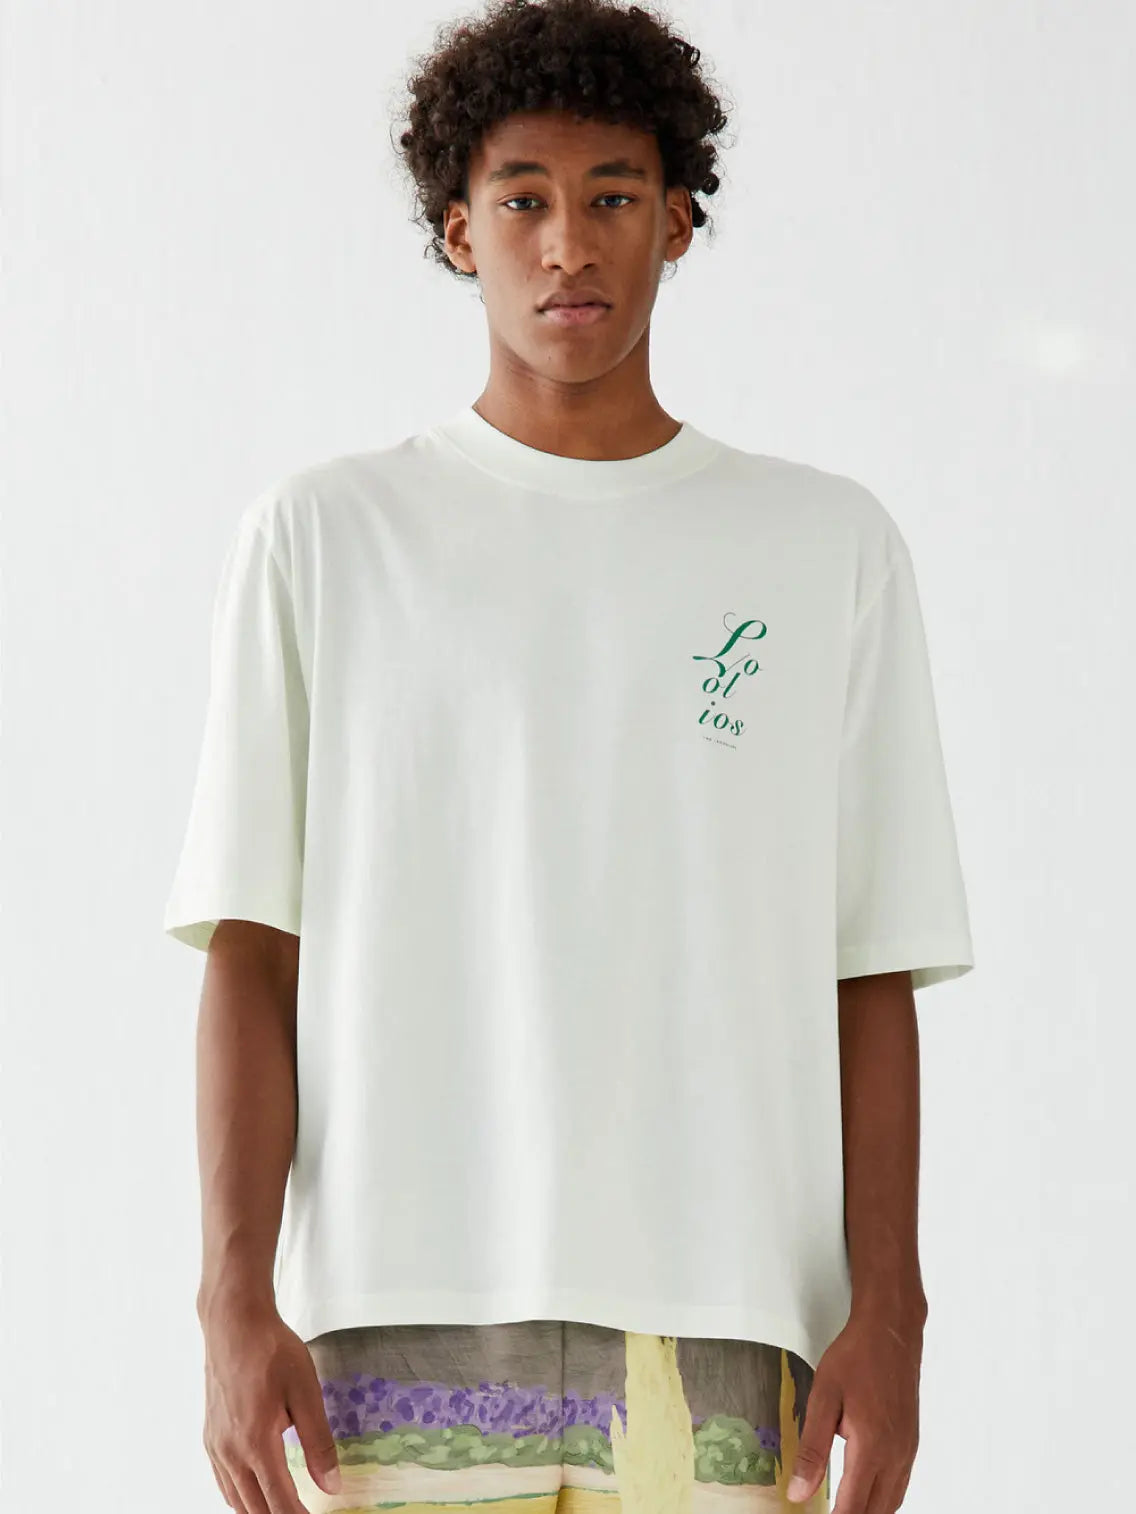 Matisse Mint Green T-Shirt LOolios